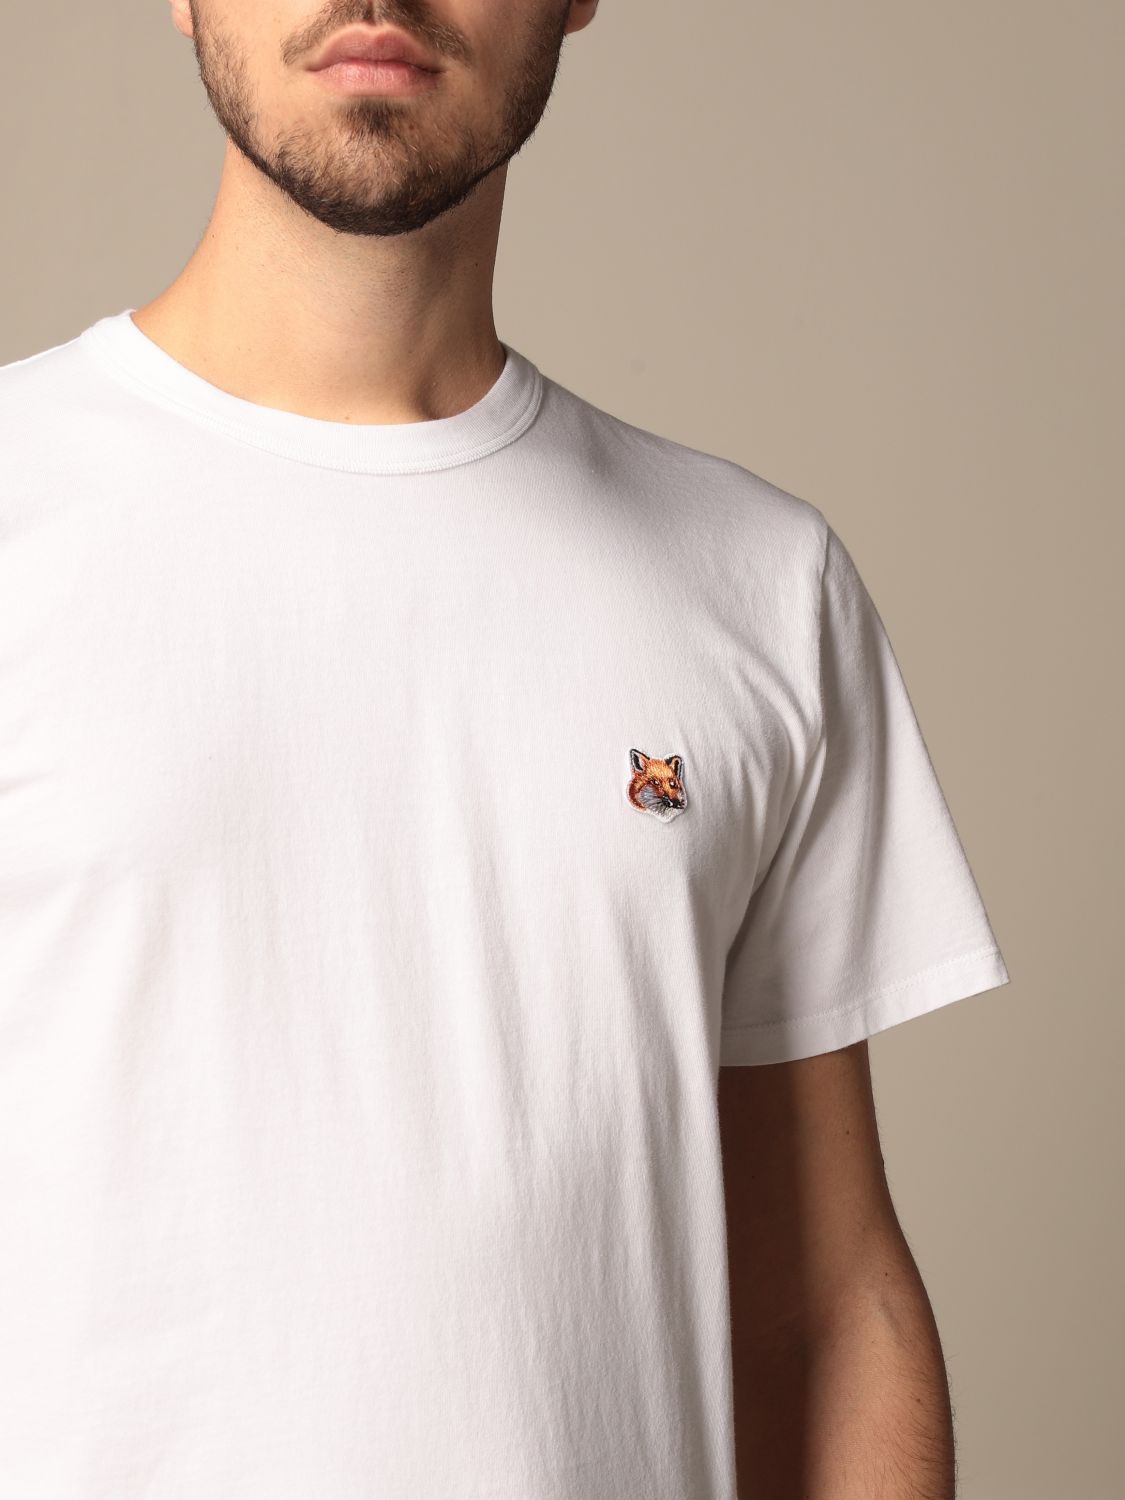 Maison Kitsuné t-shirt in cotton with logo